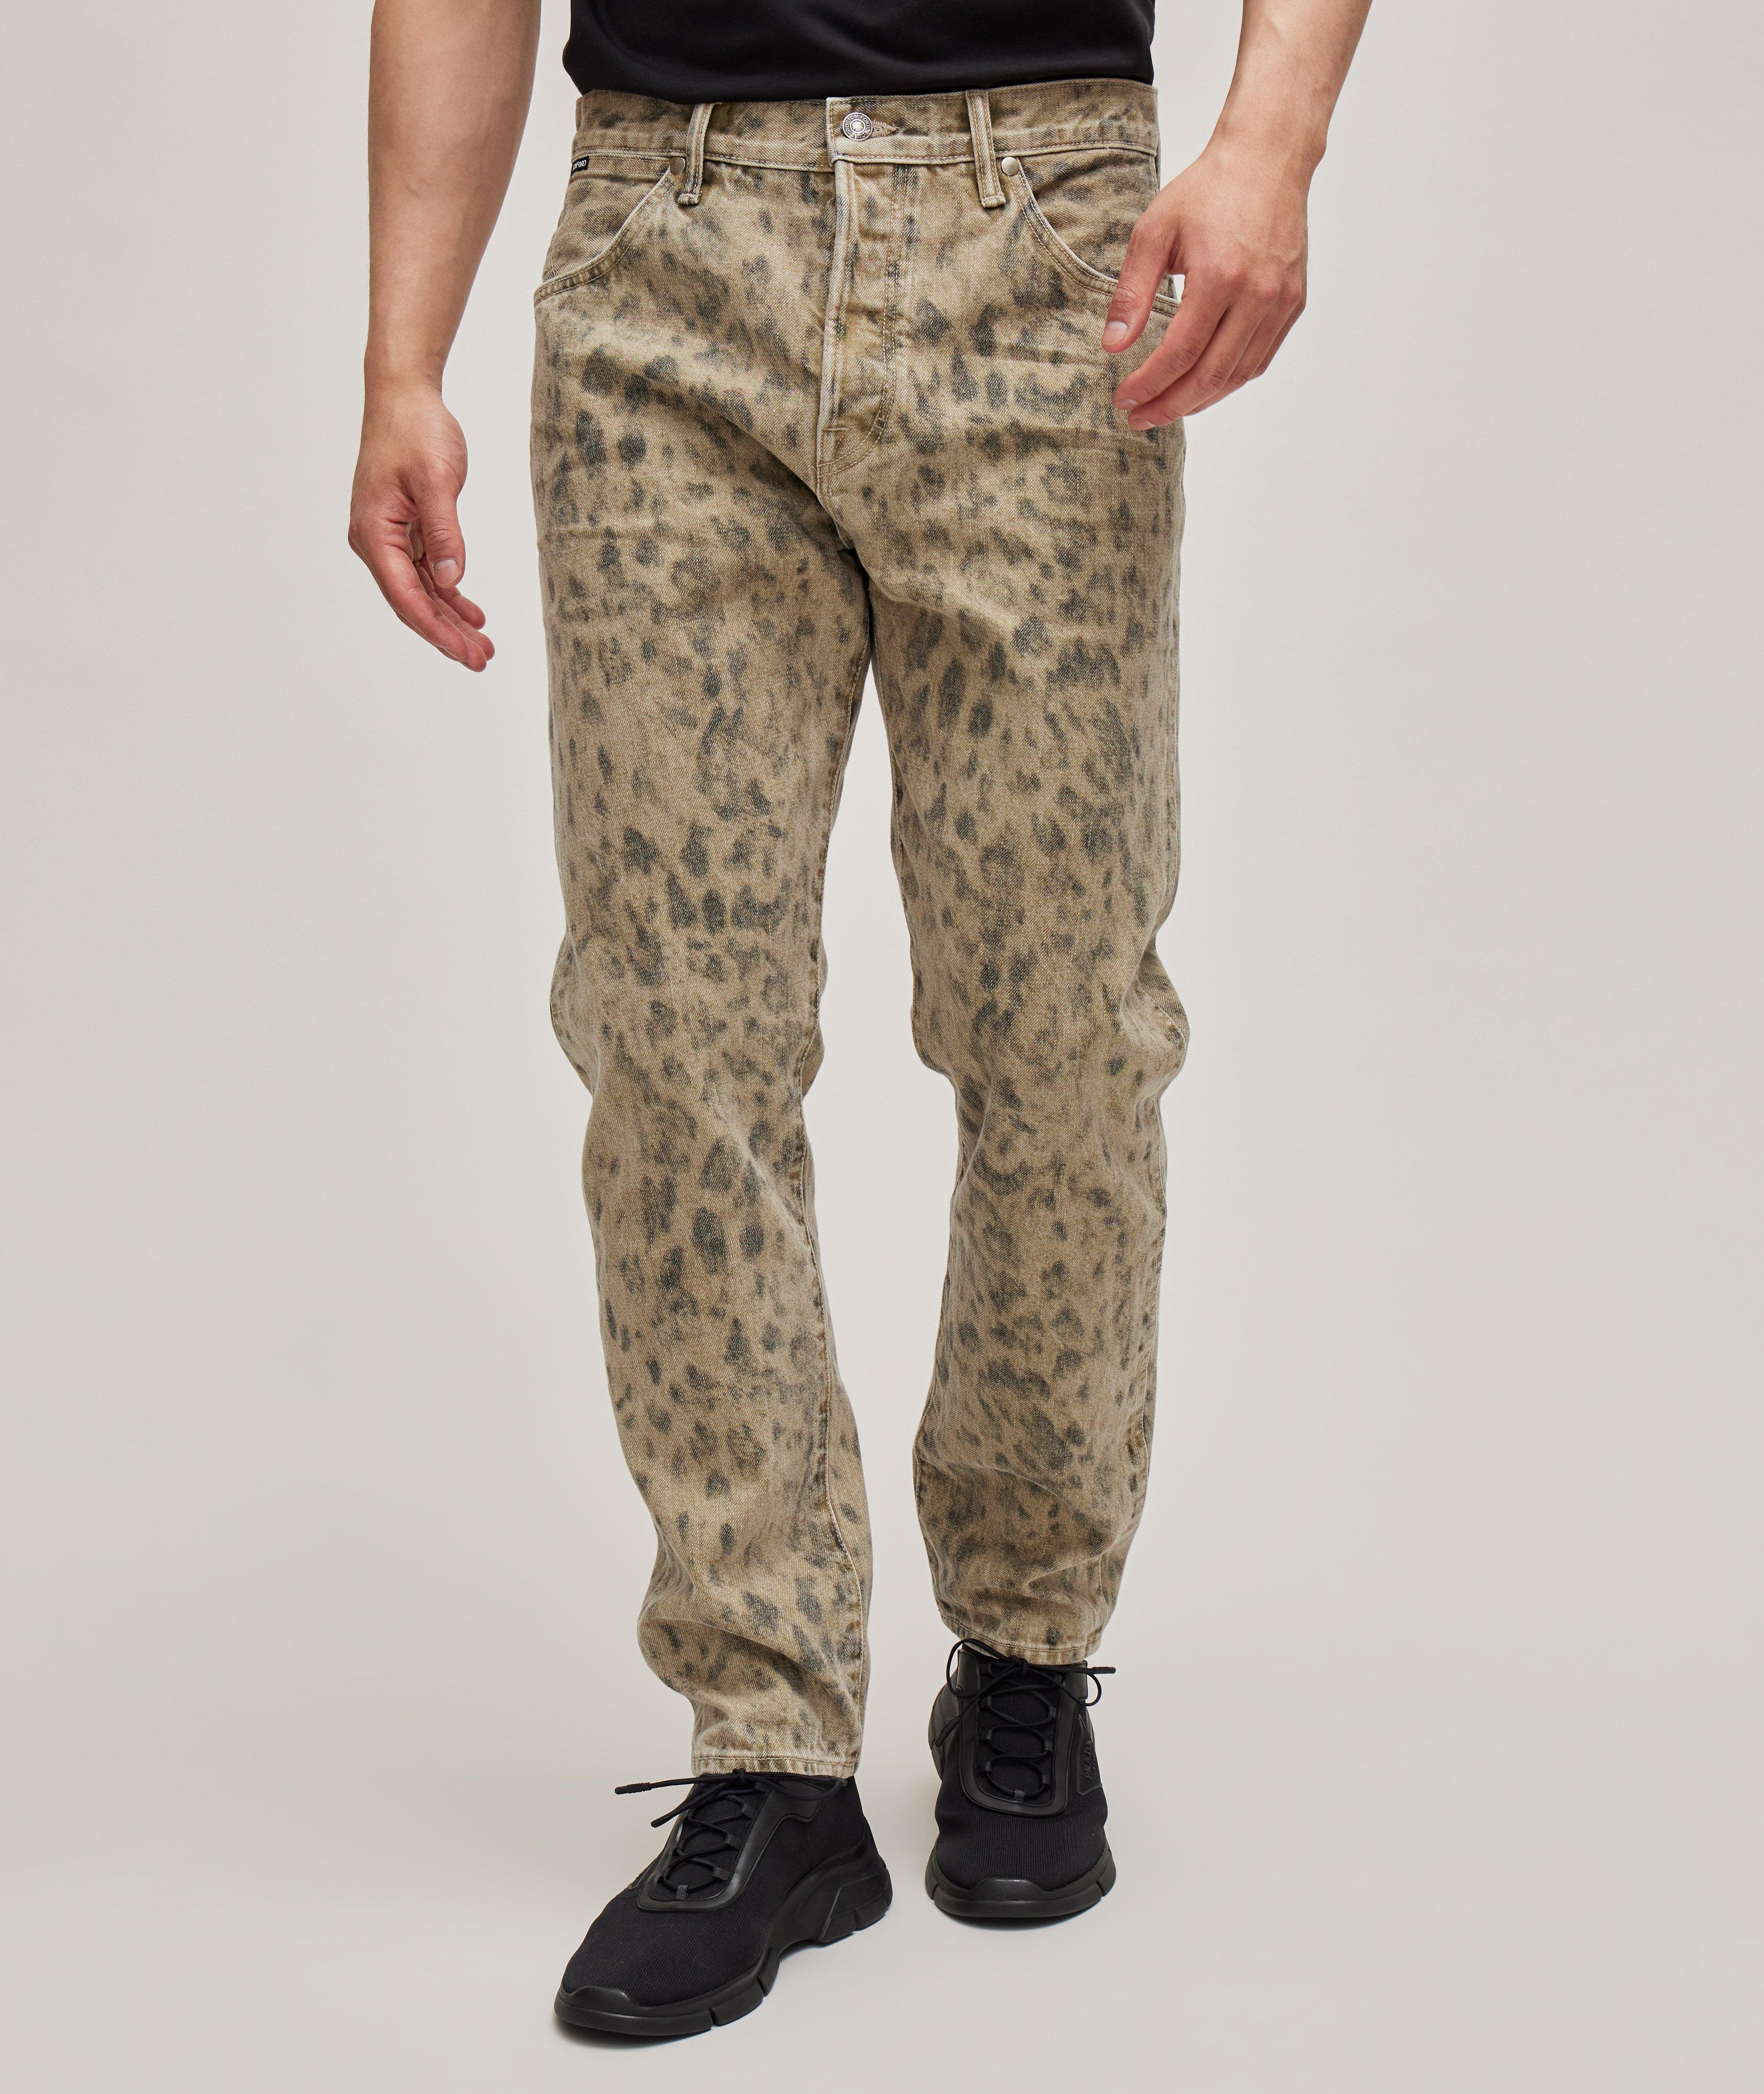 Slim-Fit Distressed Leopard Pattern Cotton Jeans image 1